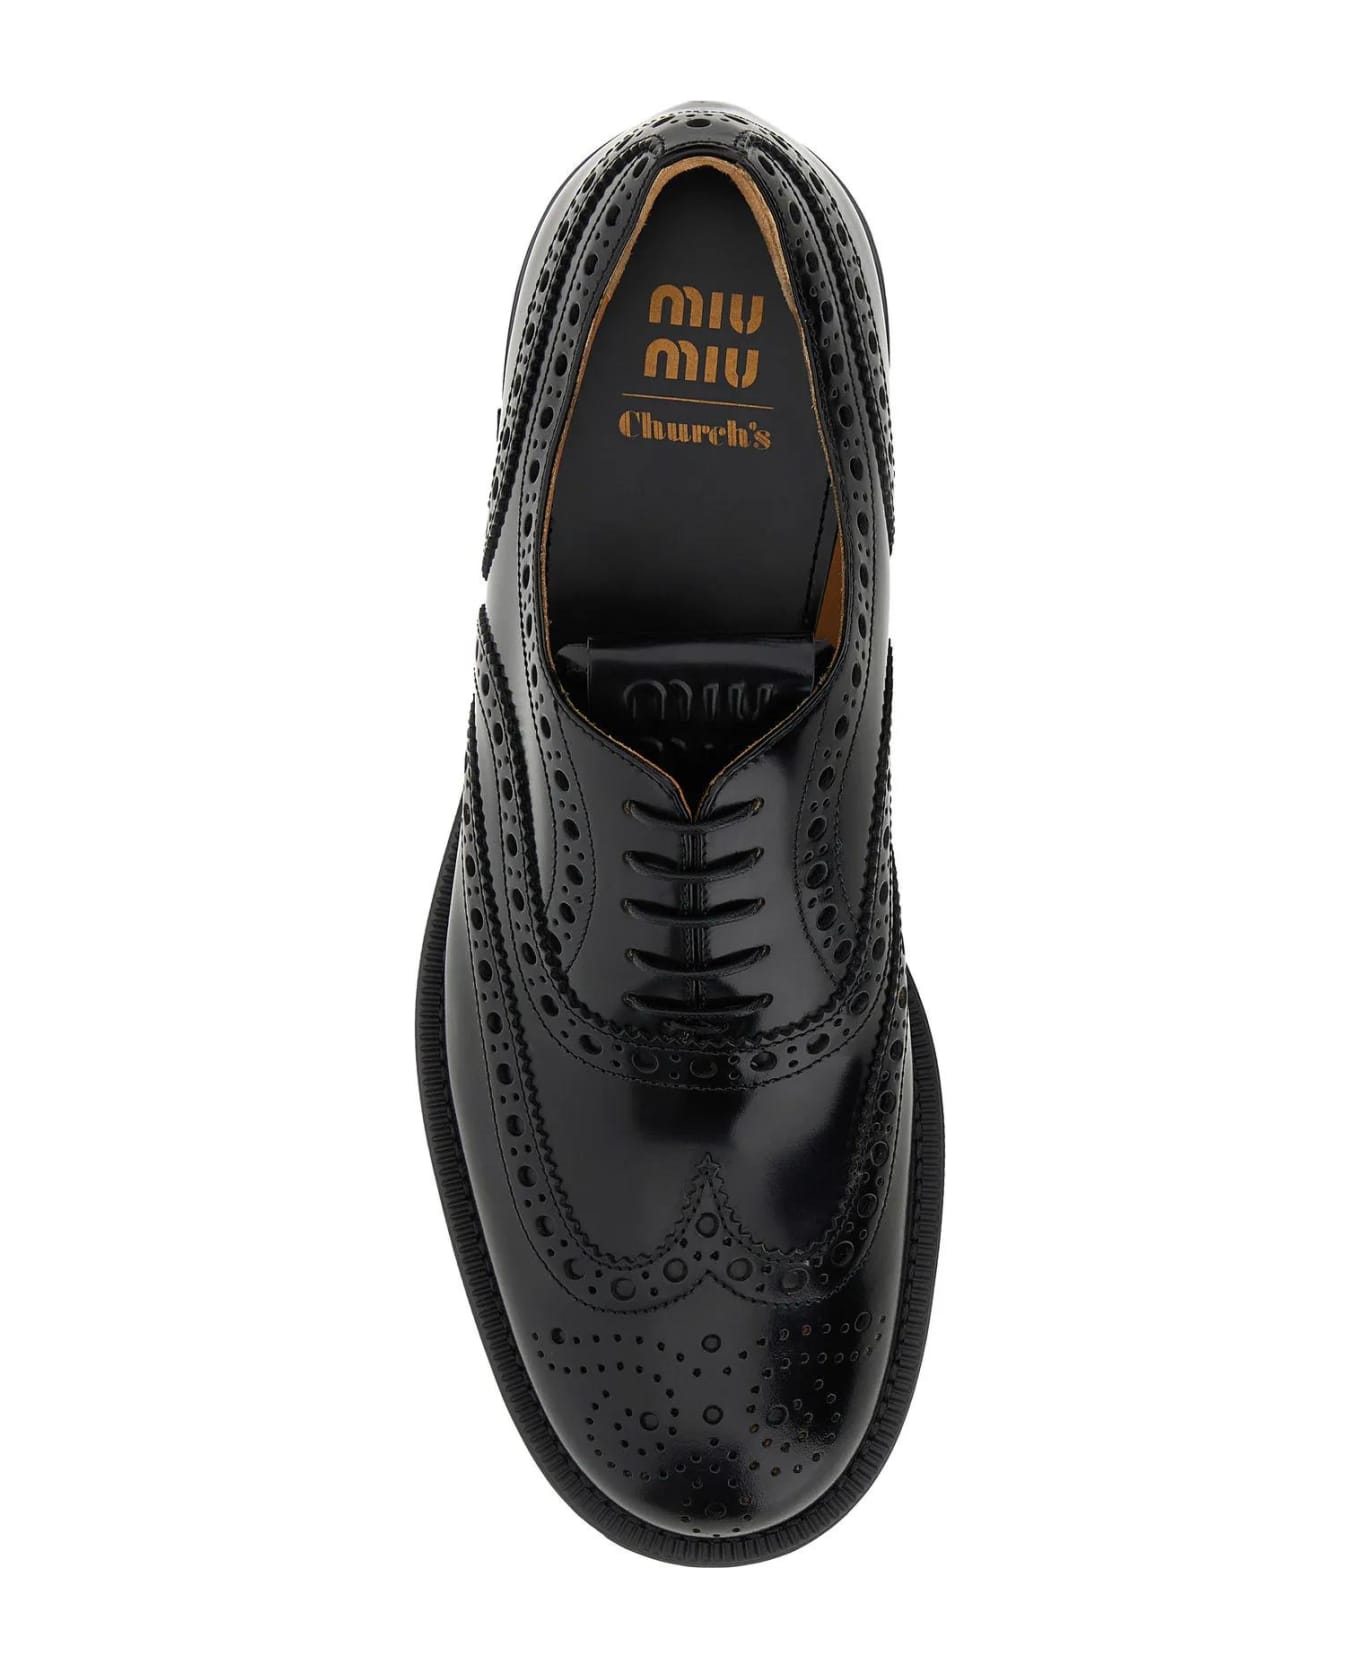 Miu Miu Black Leather Church's X Lace-up Shoes - BLACK レースアップシューズ